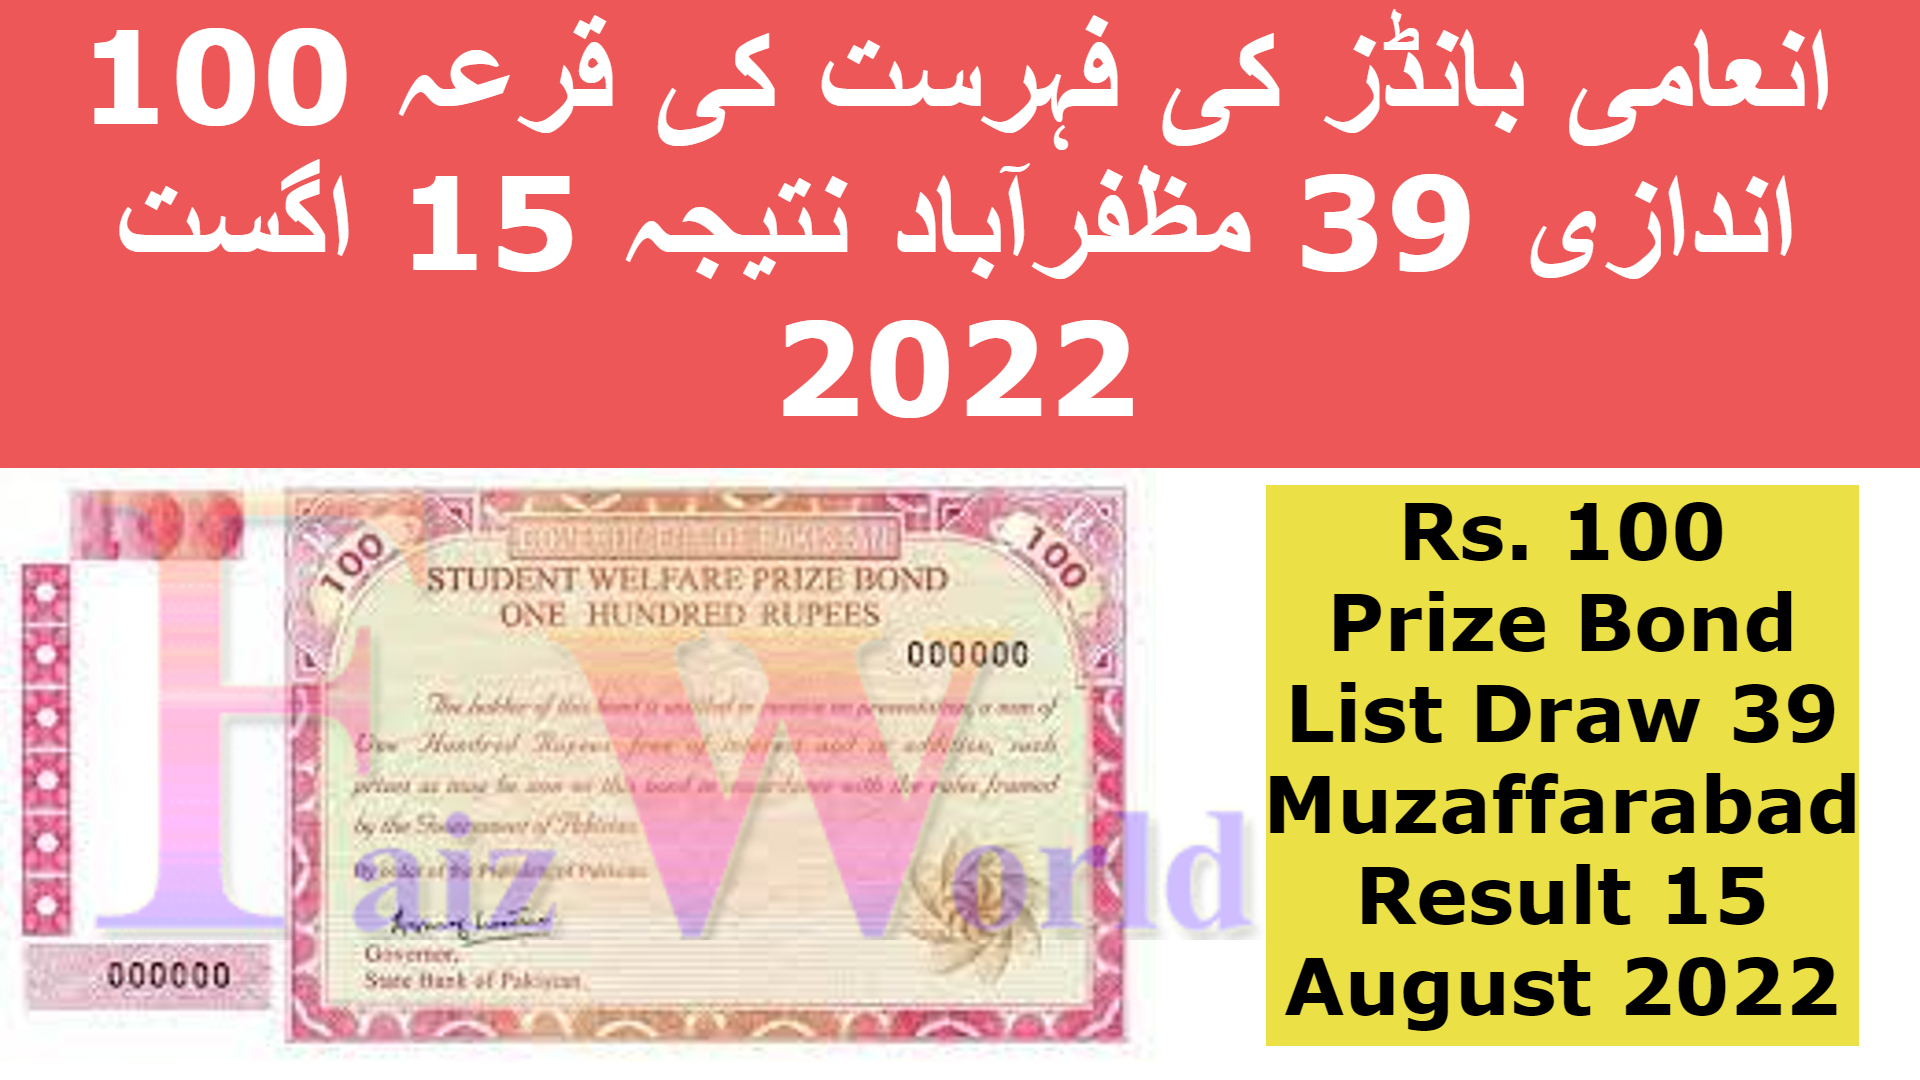 Rs. 100 Prize Bond List Draw 39 Muzaffarabad Result 15 August 2022